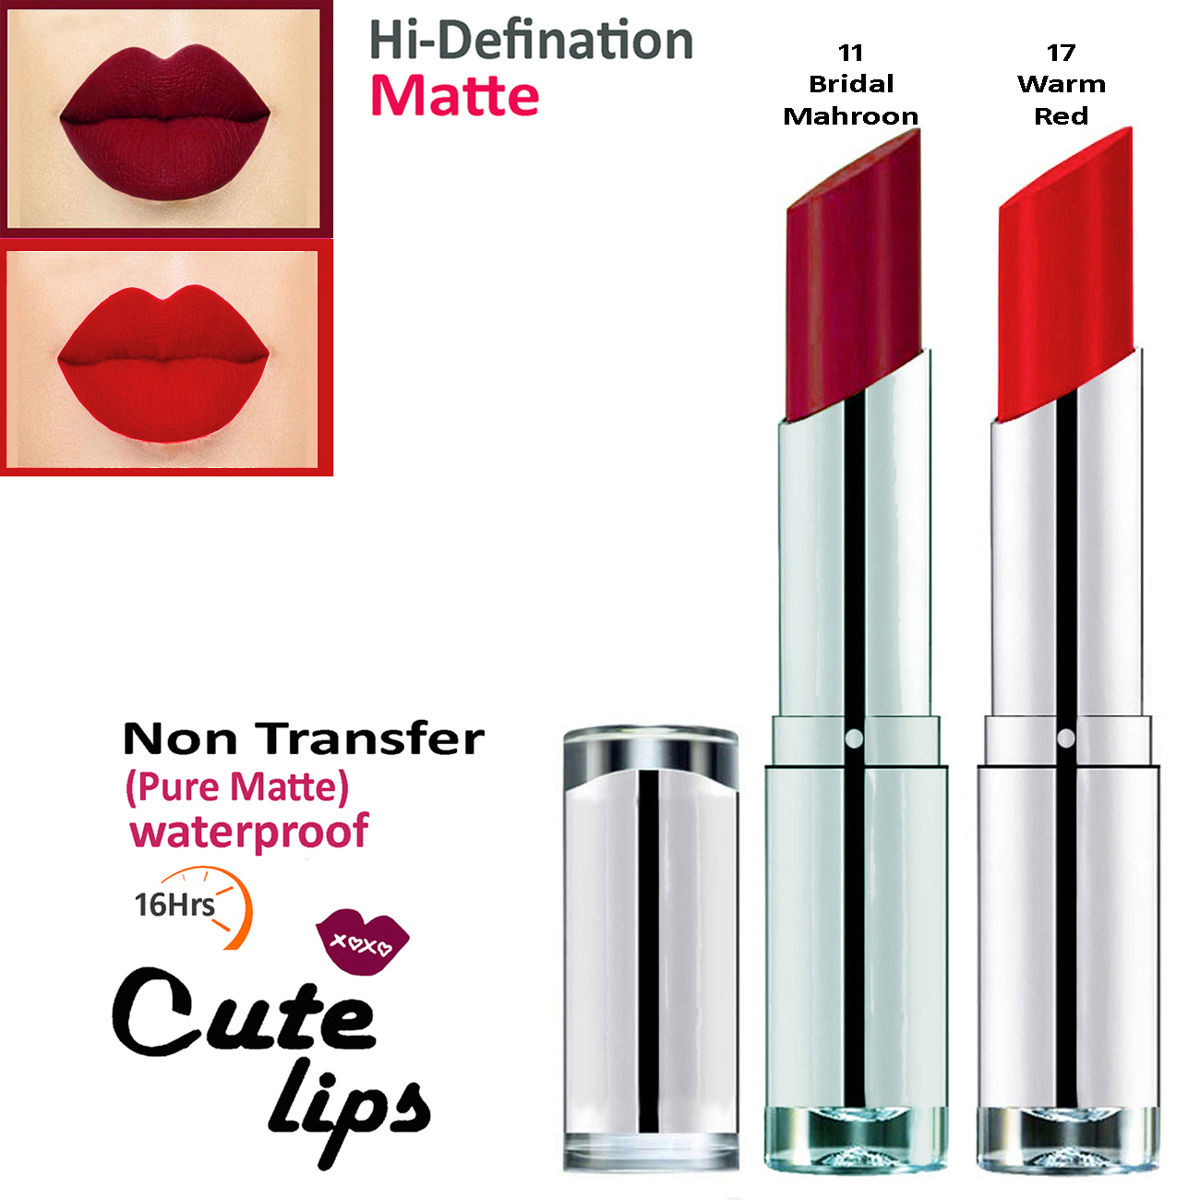 bq BLAQUE Cute Lips Non Transfer Matte Lipstick 2.4 gm each - 11 ...